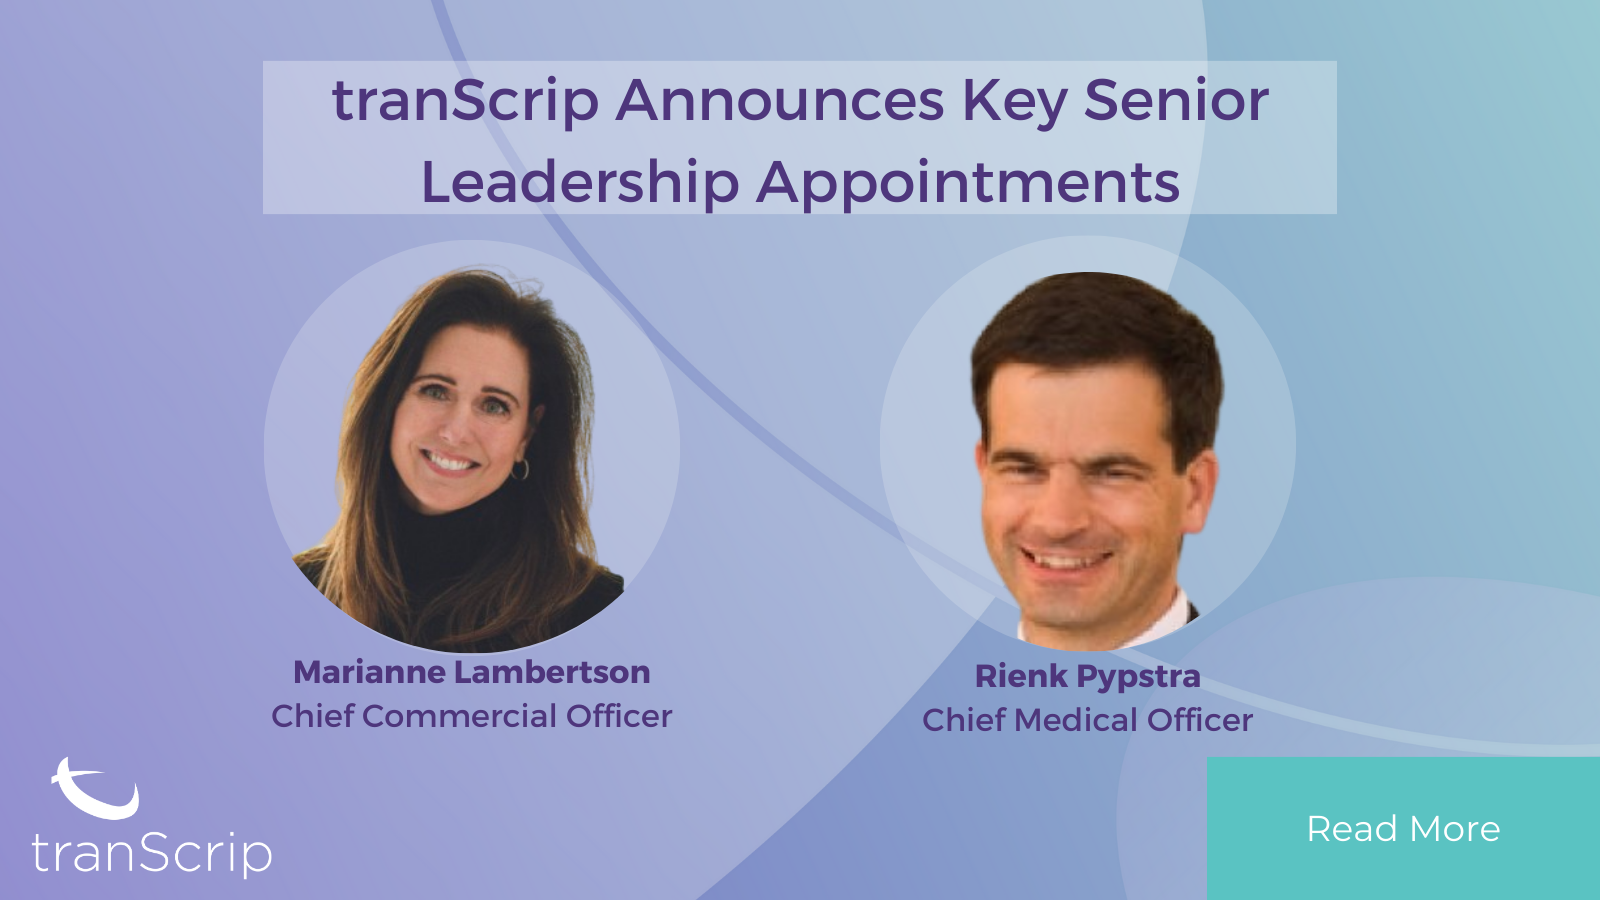 tranScrip Announces Key Senior Leadership Appointments